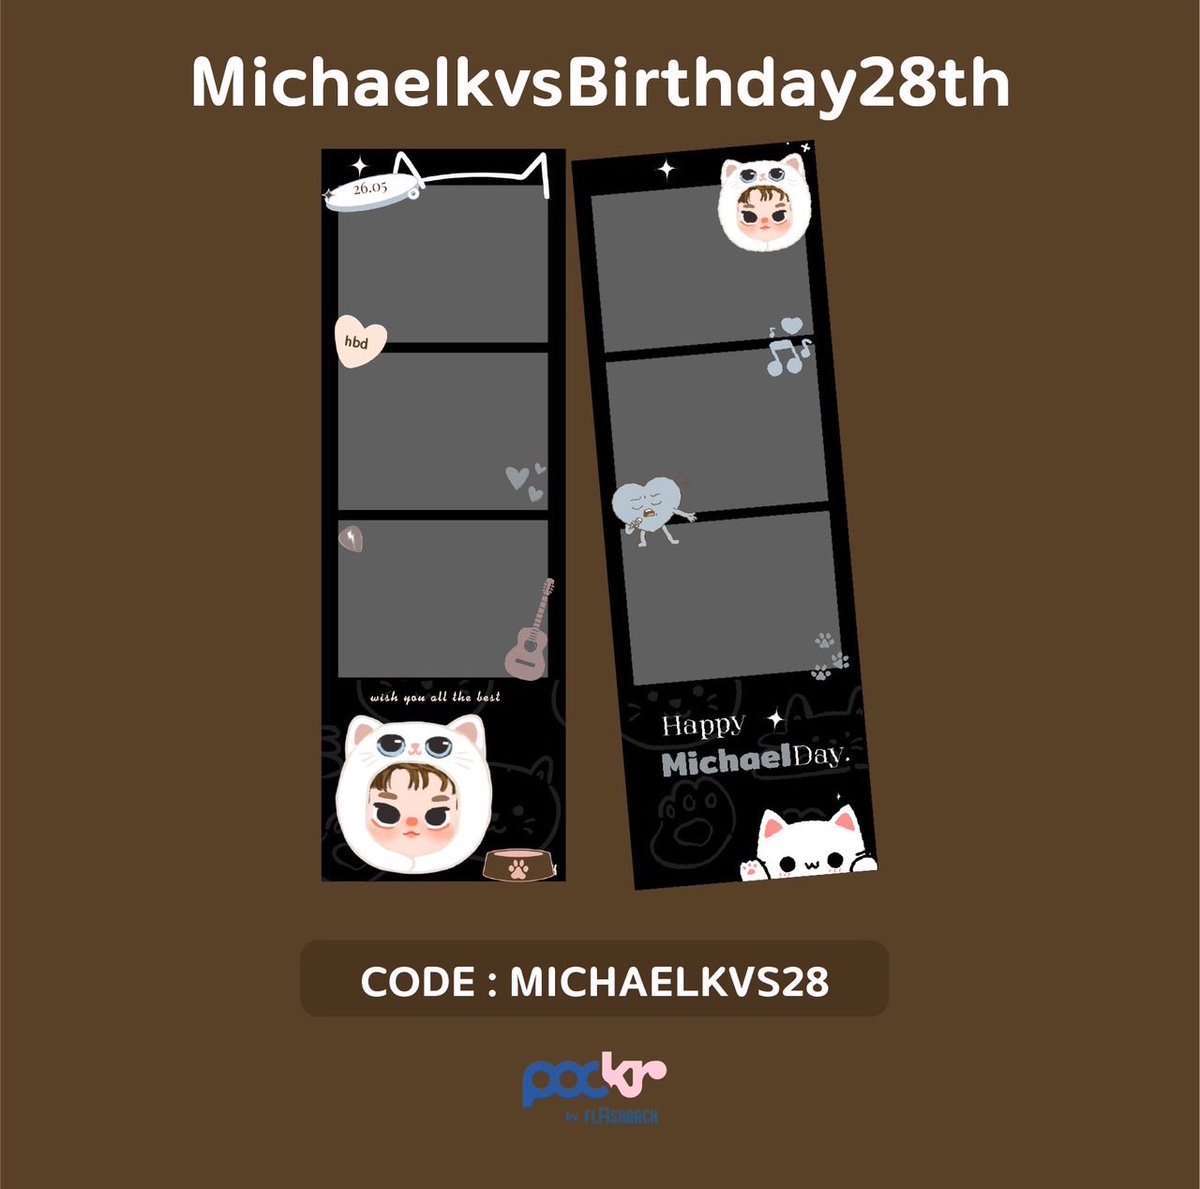 PHOTOBOOTH PROJECT 🎊 #MichaelkvsBirthday28th 🎂🎁 #michaelkvs 🐾 📍@helloflashback ทุกสาขา CODE : MICHAELKVS28 DATE : TODAY - TBA * วิธีการใส่ Code และจุดวางตู้ แปะไว้ให้ในเมนชั่นนะคะ 👇🏻 @Michaellhor อย่าลืมแวะไปถ่ายเก็บไว้น๊า Project by @dudududukduduk /@monthichasi